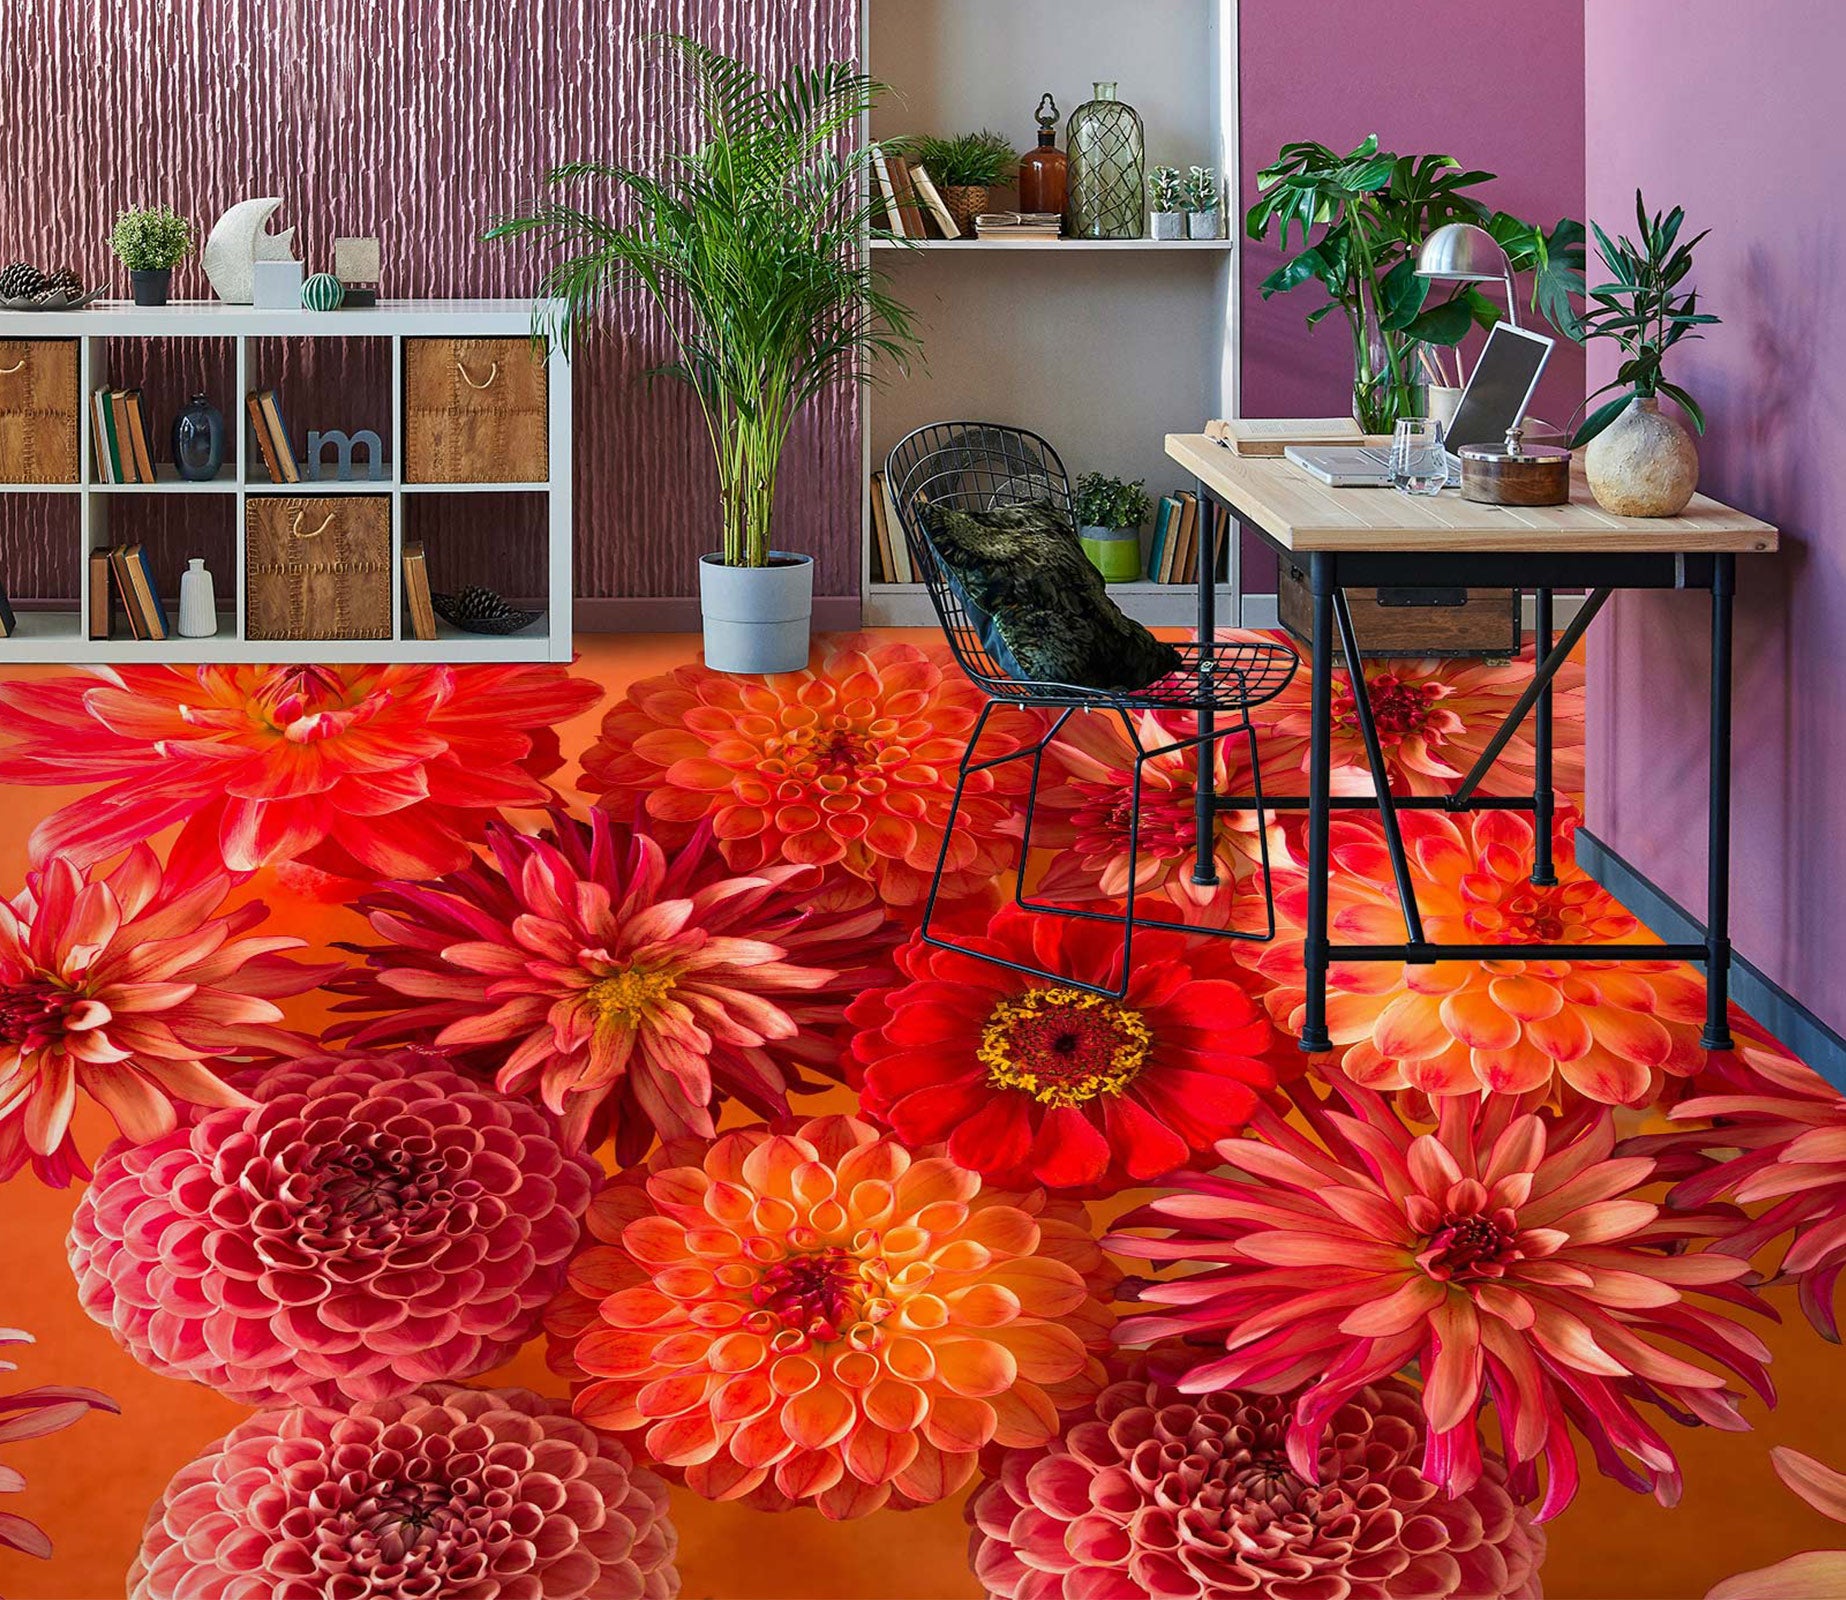 3D Red Chrysanthemum 9868 Assaf Frank Floor Mural  Wallpaper Murals Self-Adhesive Removable Print Epoxy